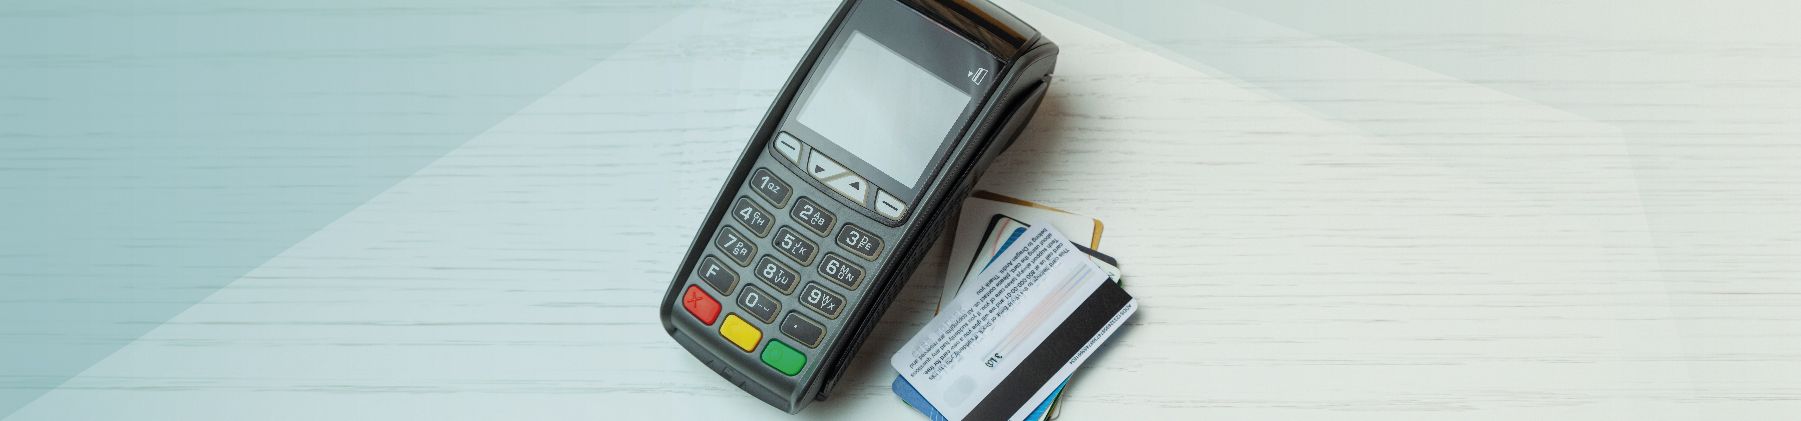 Payment acceptance through V-POS - Bank of Karditsa